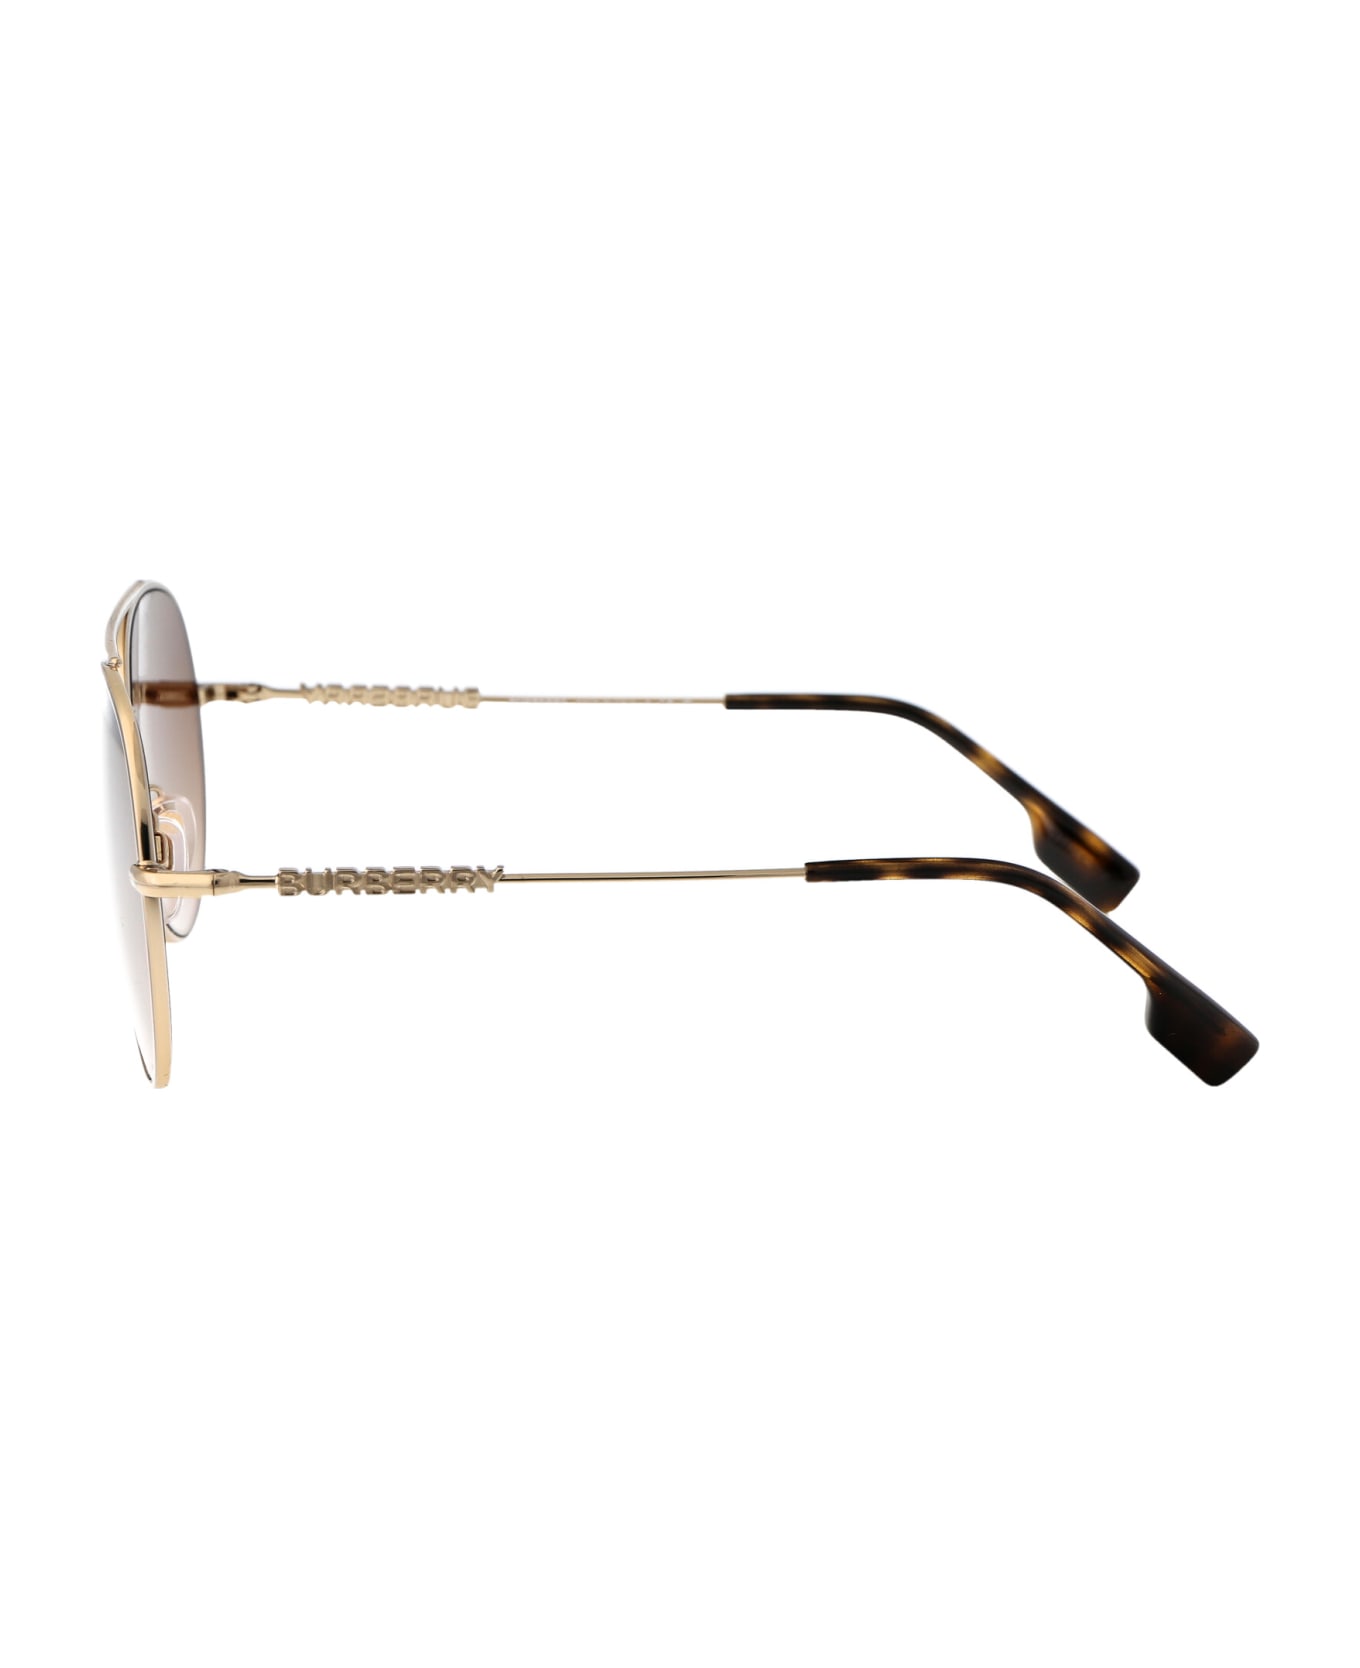 Burberry Eyewear 0be3147 Sunglasses - 110913 LIGHT GOLD